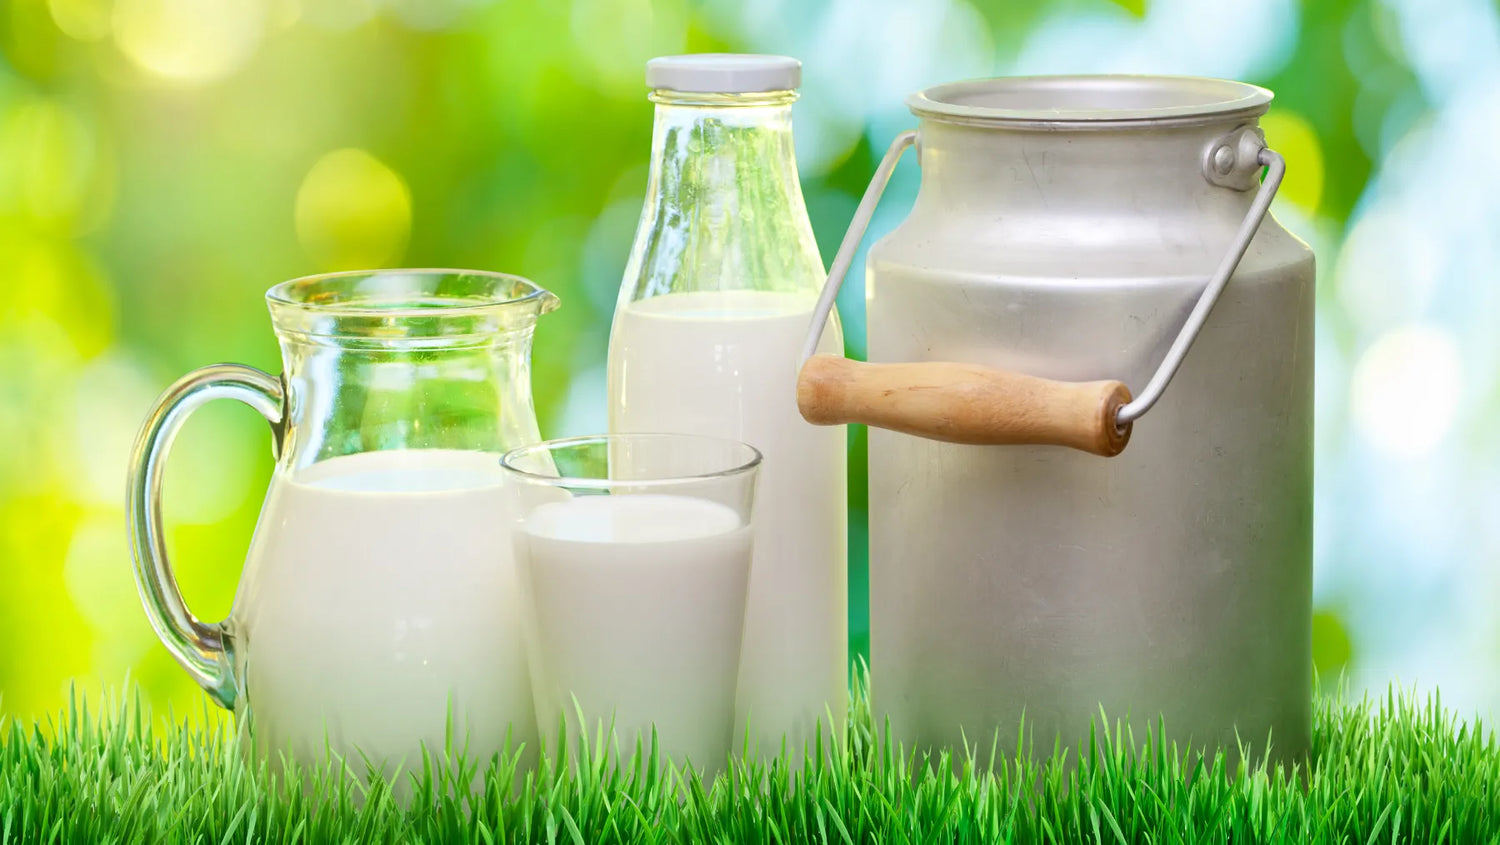 Whole milk, Whole dairy, benefits of whole milk, benefits of drinking whole milk